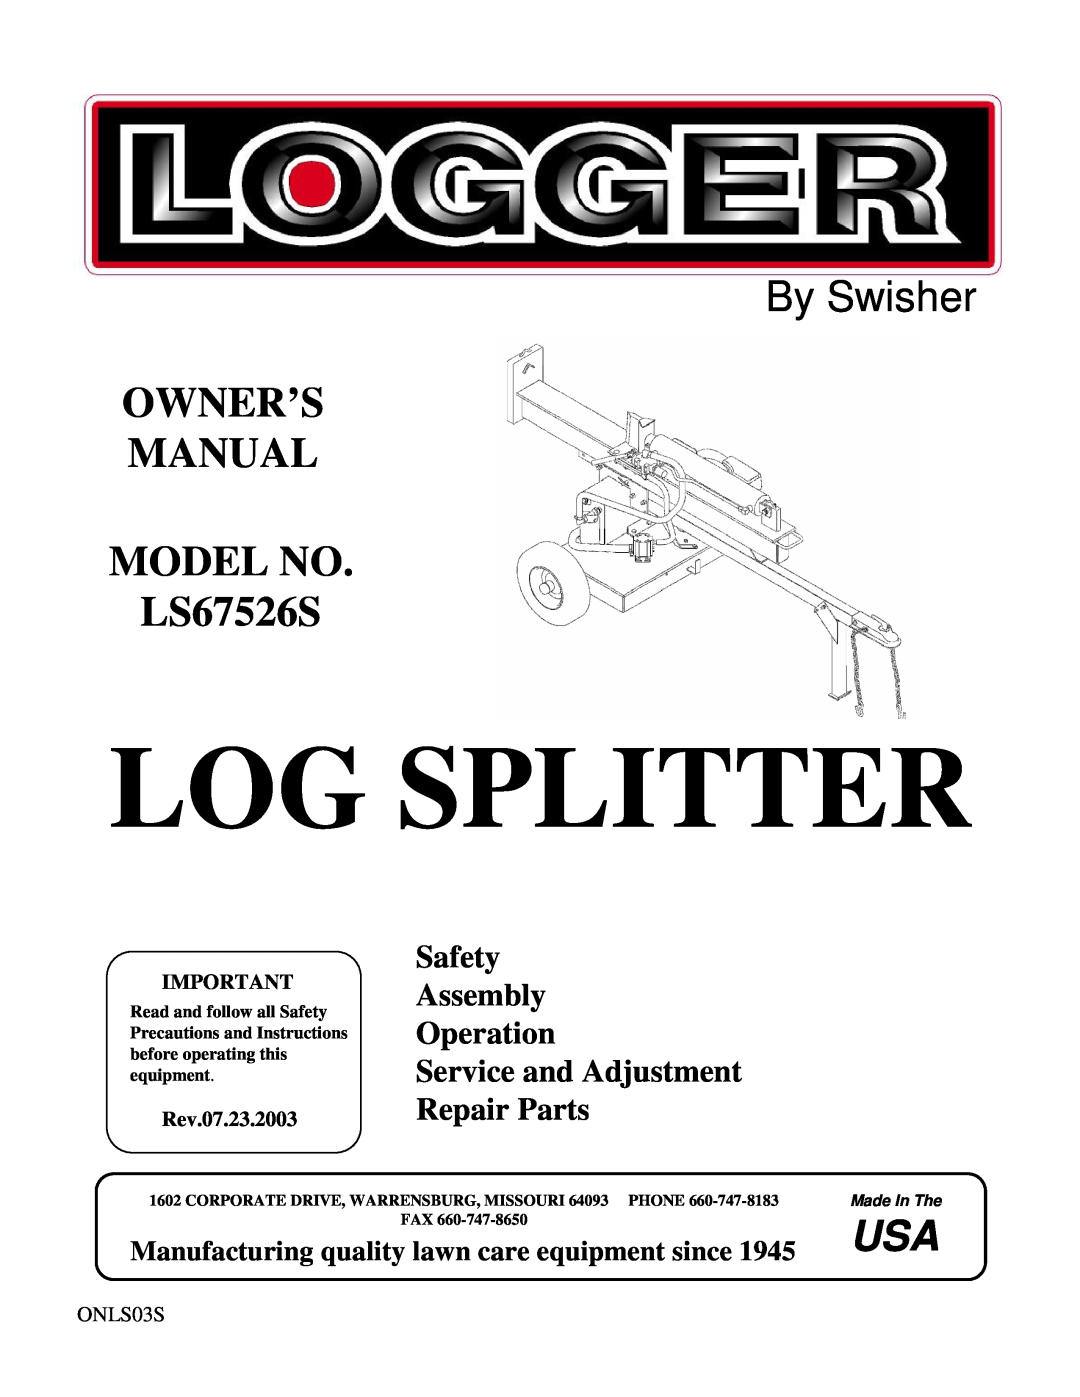 Swisher LS67526S manual Rev.07.23.2003, ONLS03S, Logsplitter, BySwisher, Safety, Assembly Operation ServiceandAdjustment 